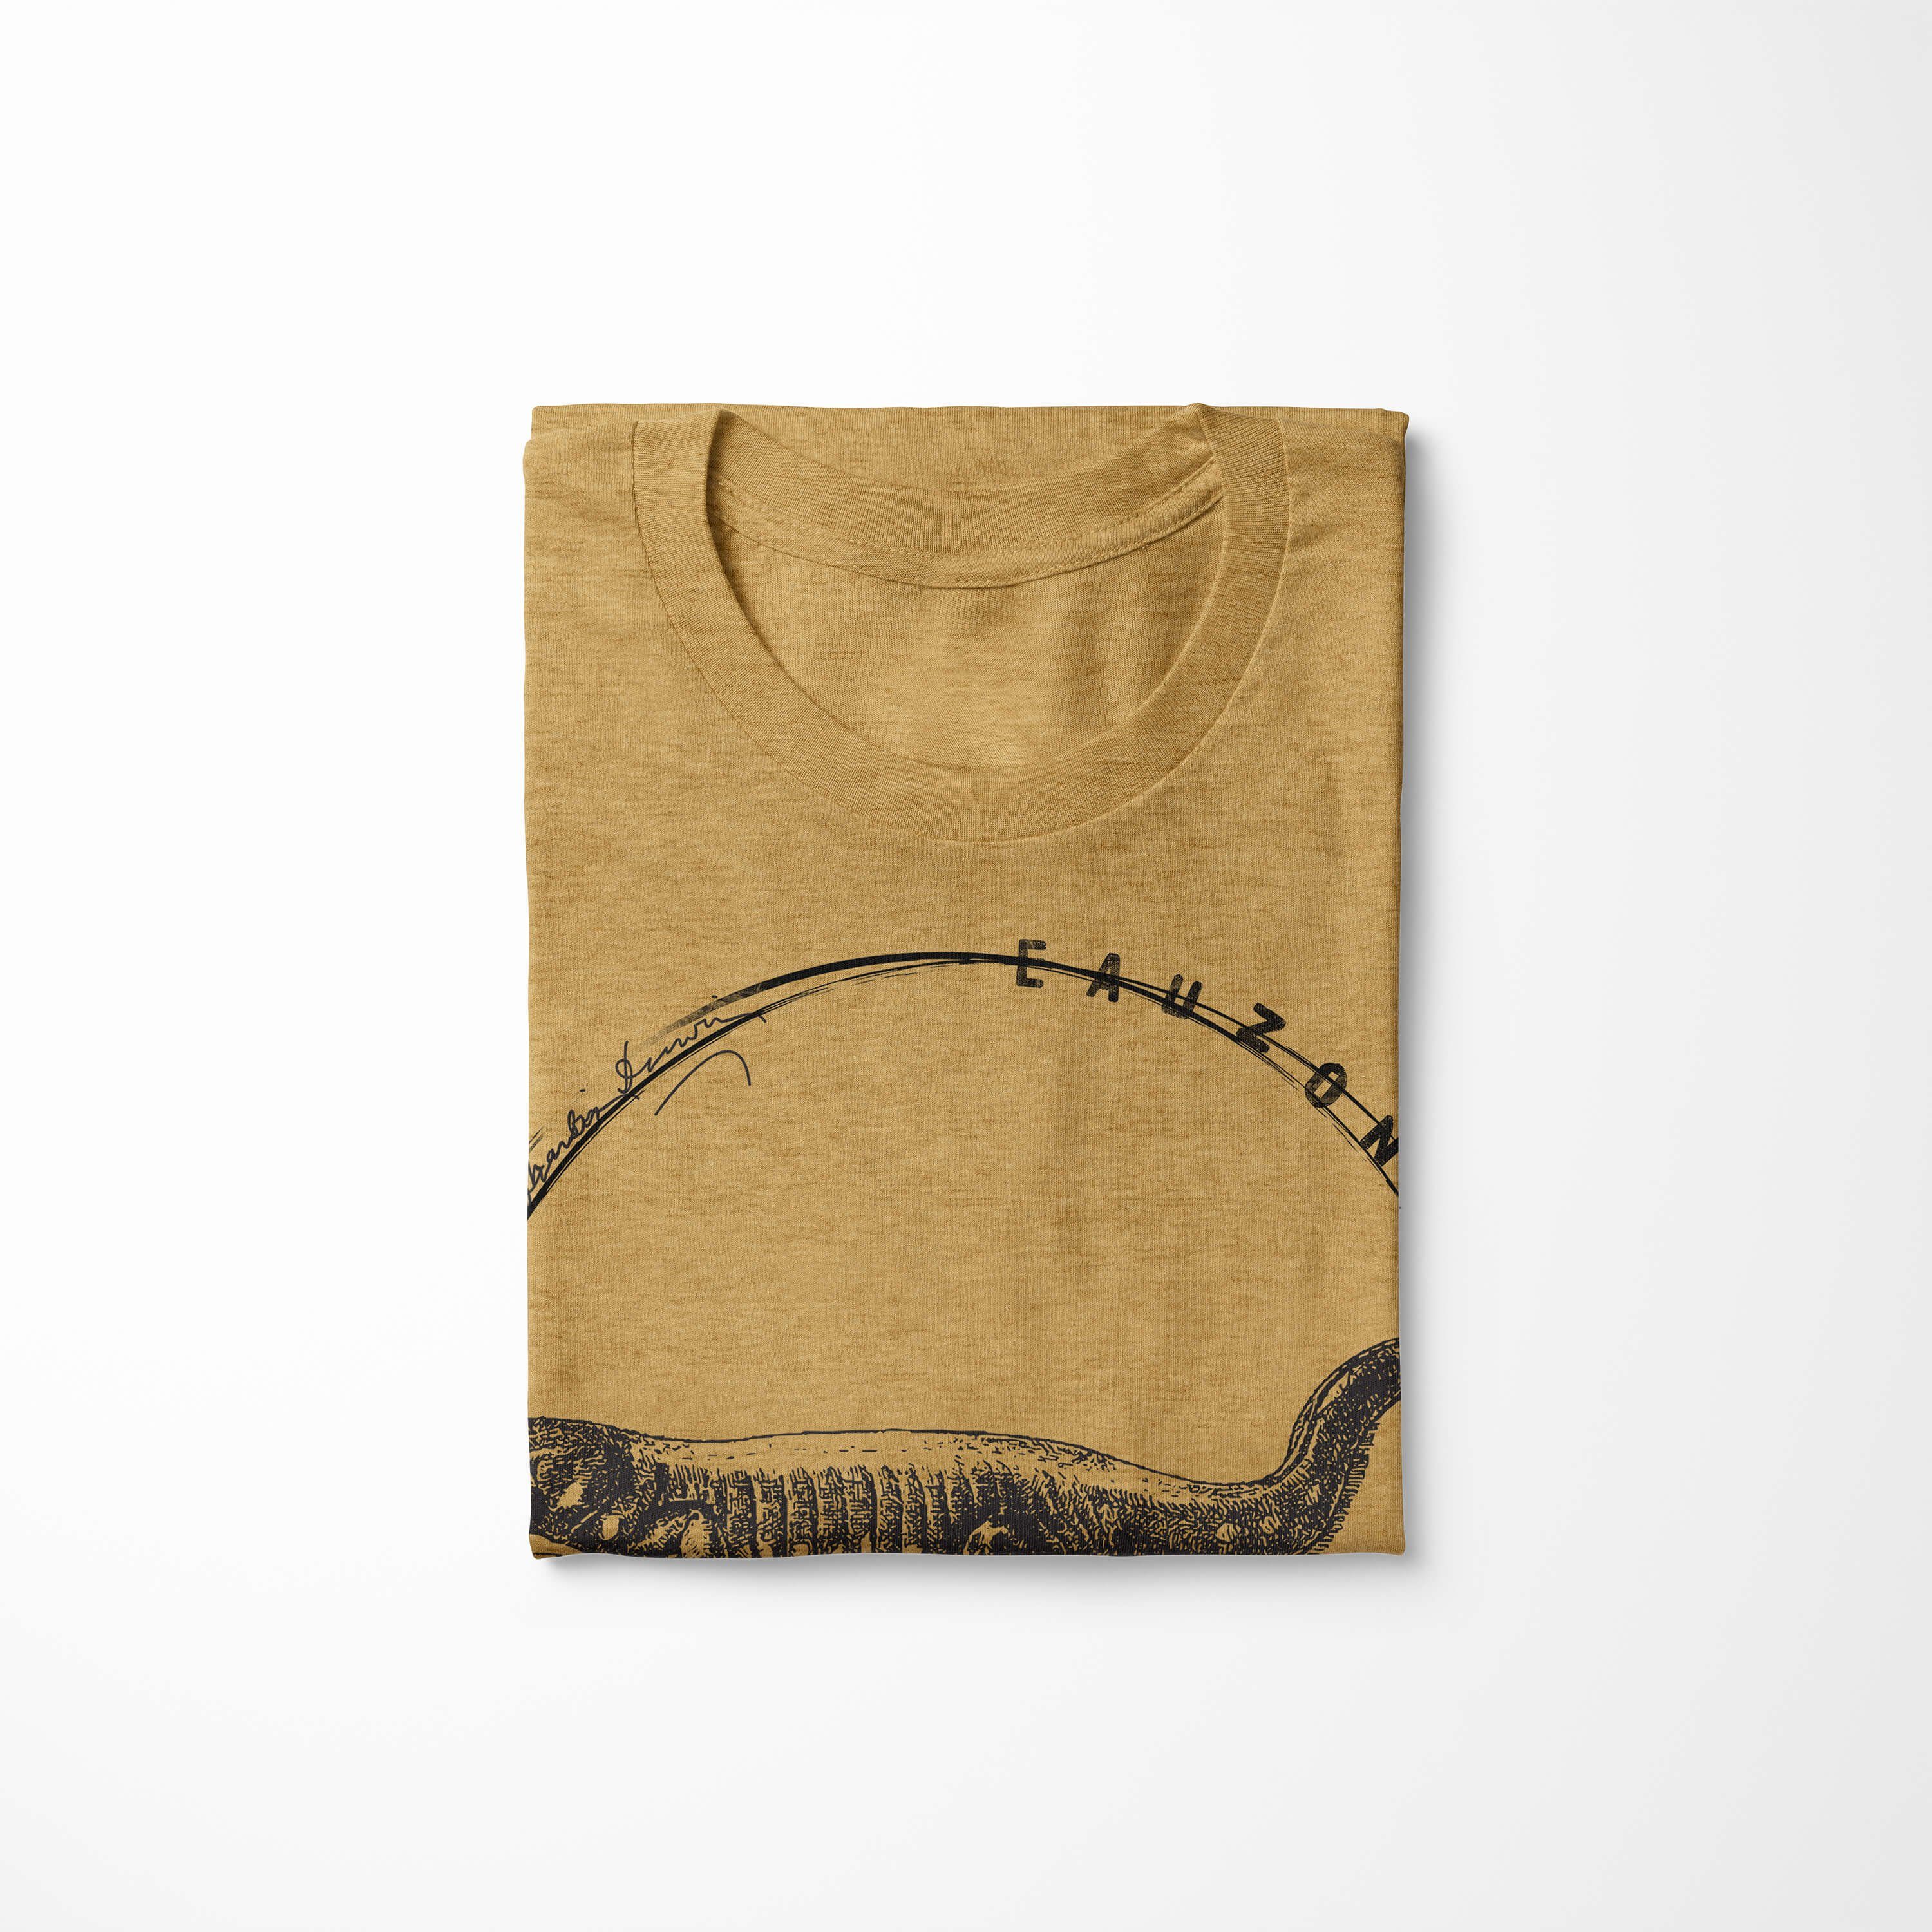 T-Shirt Antique Gold T-Shirt Sinus Evolution Herren Amblystoma Art